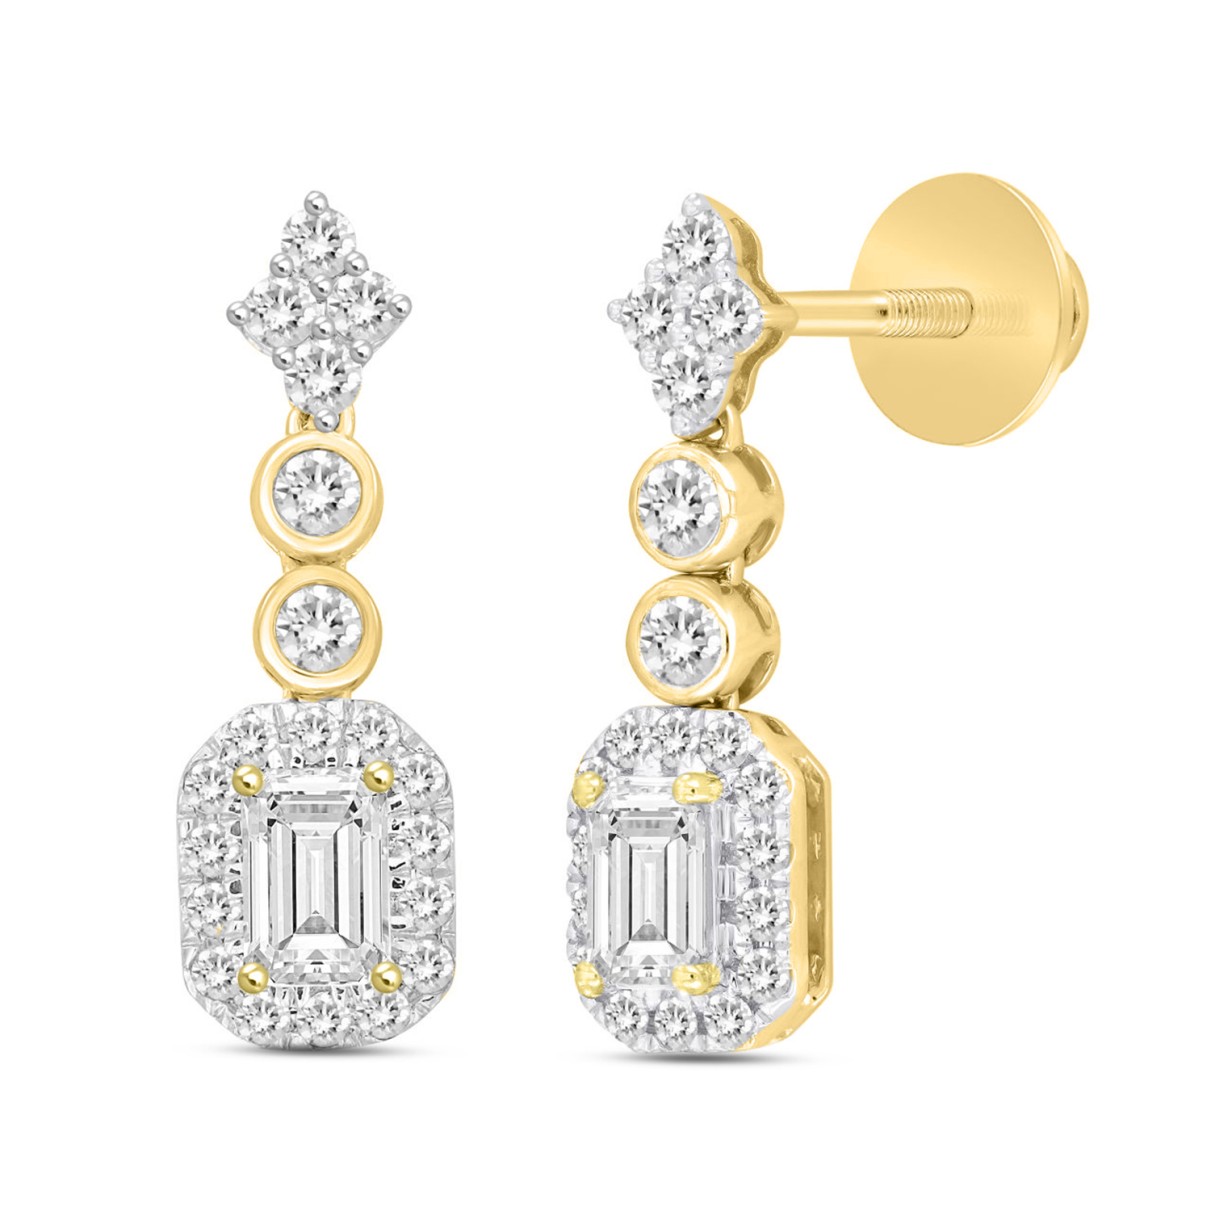 14K YELLOW GOLD 2CT ROUND EMERALD DIAMOND LADIES LINEAR EARRINGS (CENTER STONE EMERALD DIAMOND 1CT )